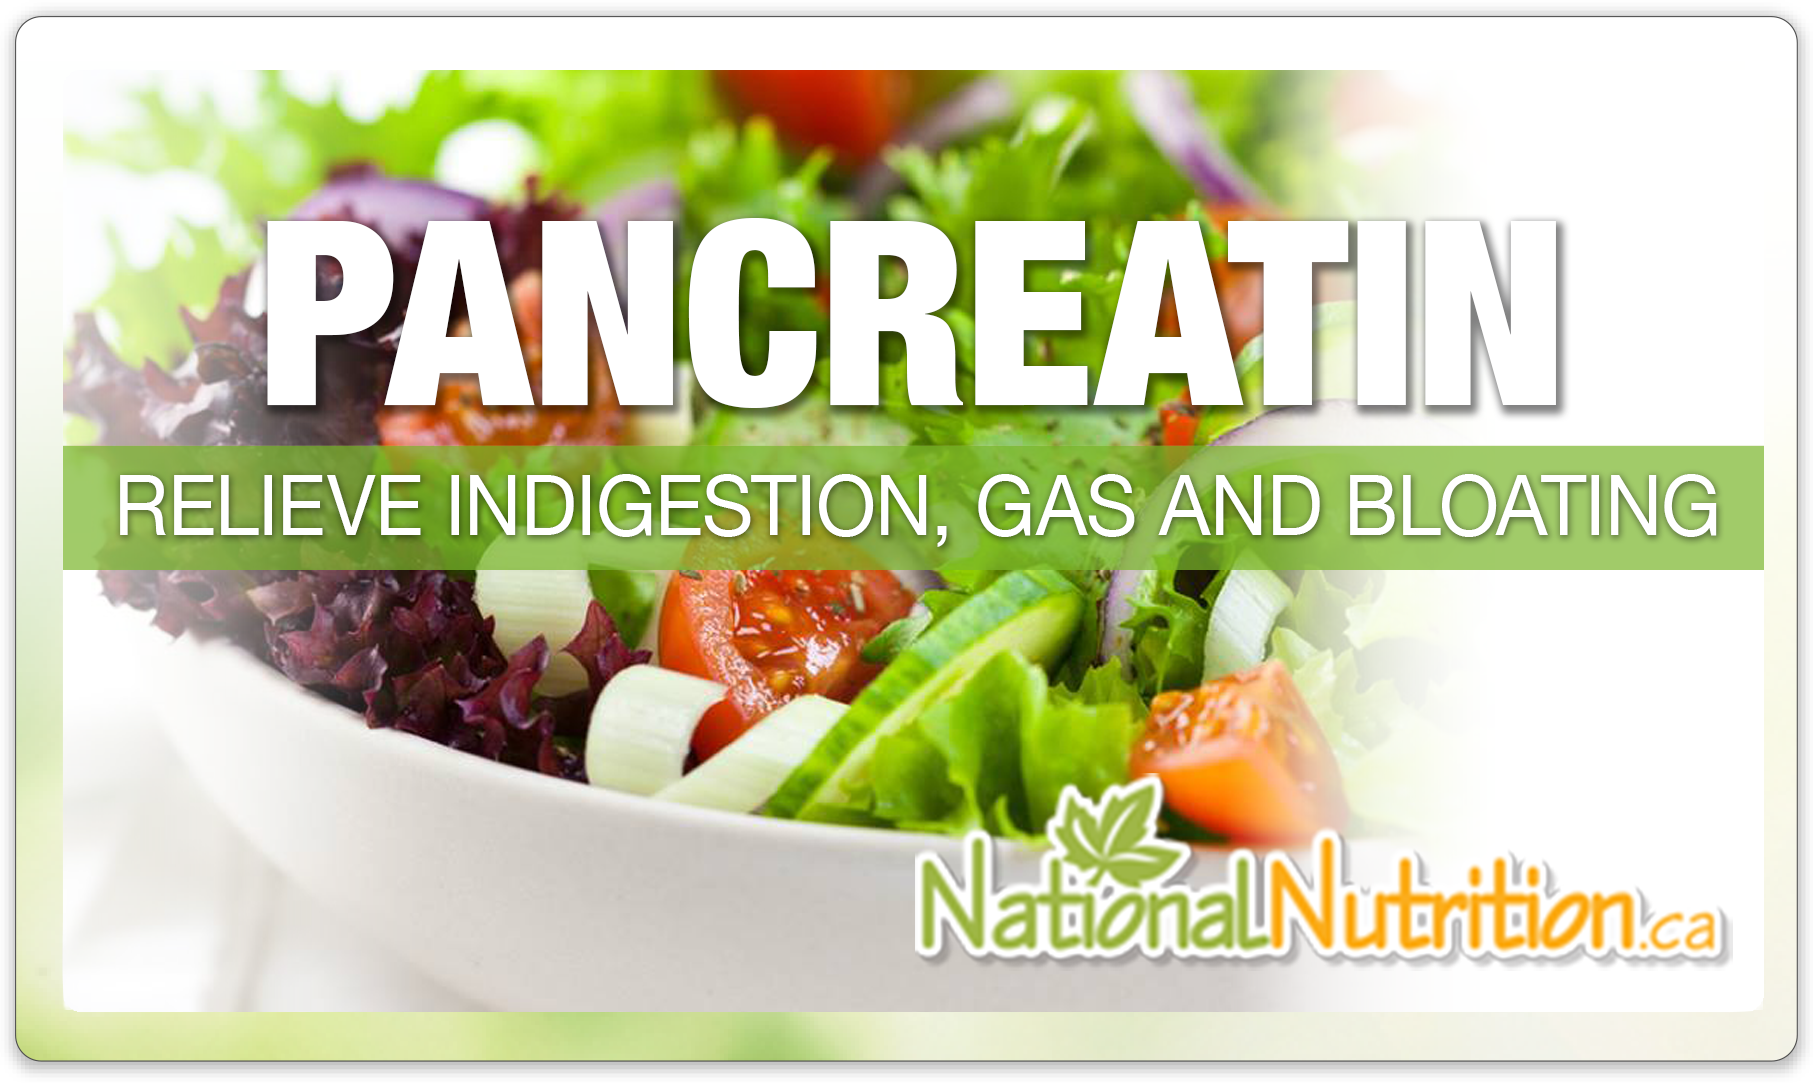 Pancreatin  - National Nutrition Articles